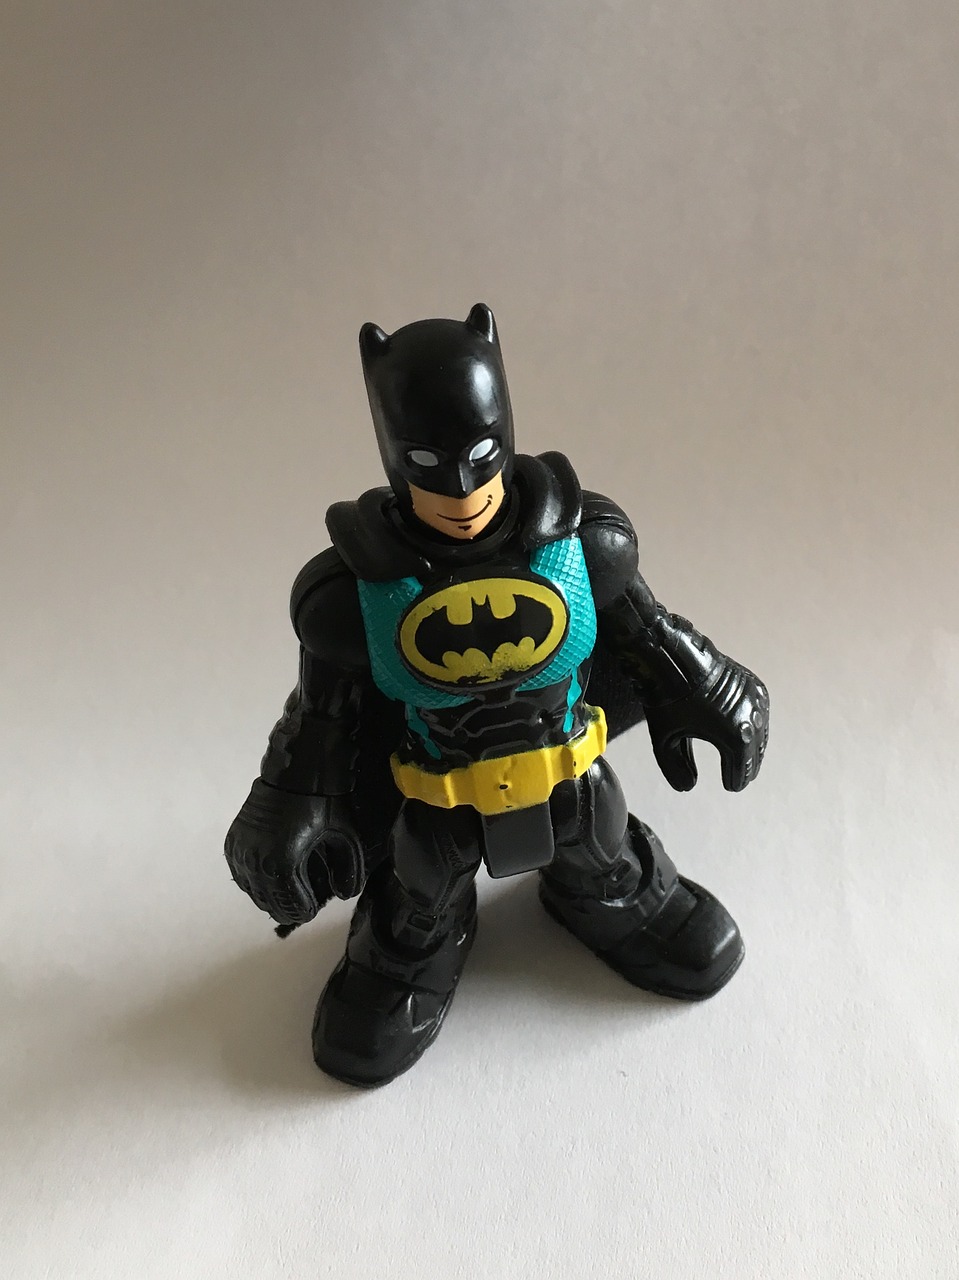 batman toy figurine free photo